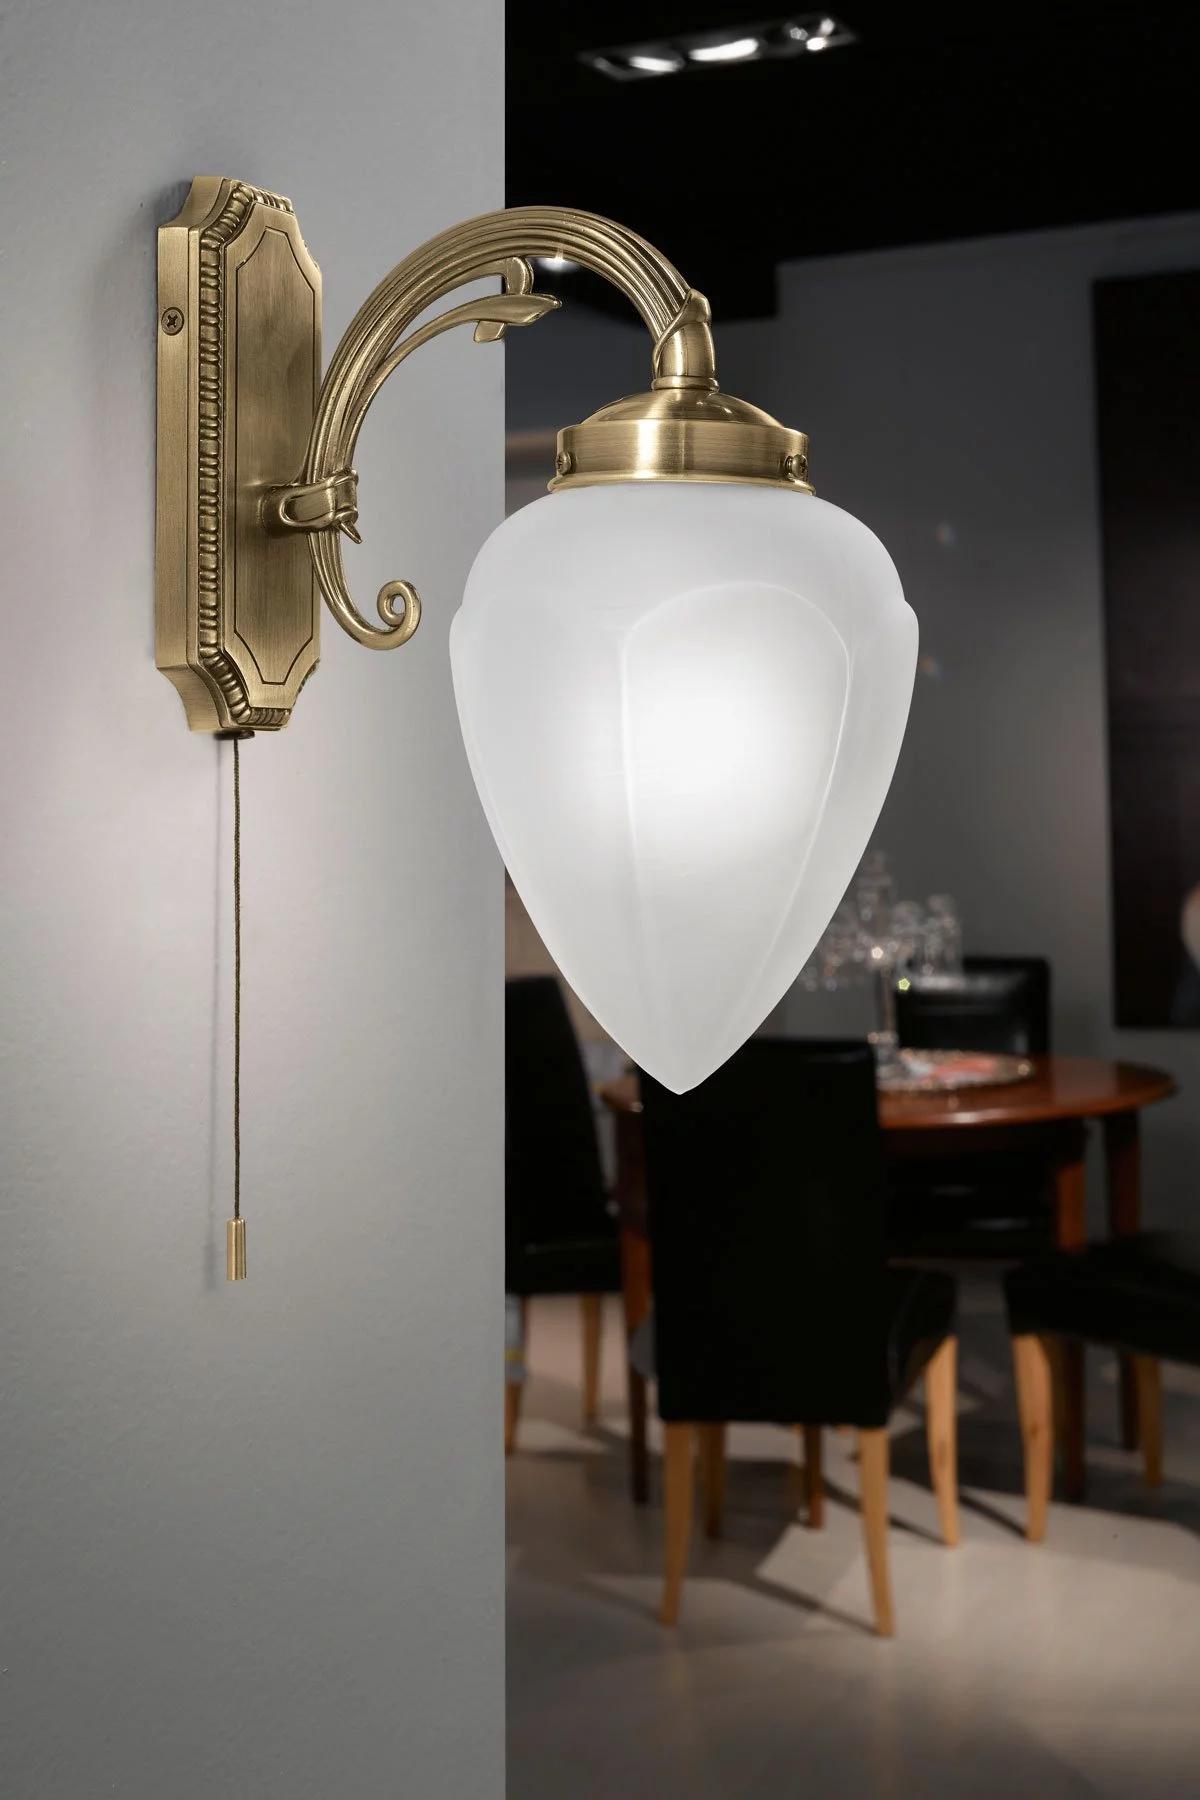   
                        
                        Бра EGLO (Австрия) 30033    
                         в стиле Классика.  
                        Тип источника света: светодиодная лампа, сменная.                                                 Цвета плафонов и подвесок: Белый.                         Материал: Стекло.                          фото 2